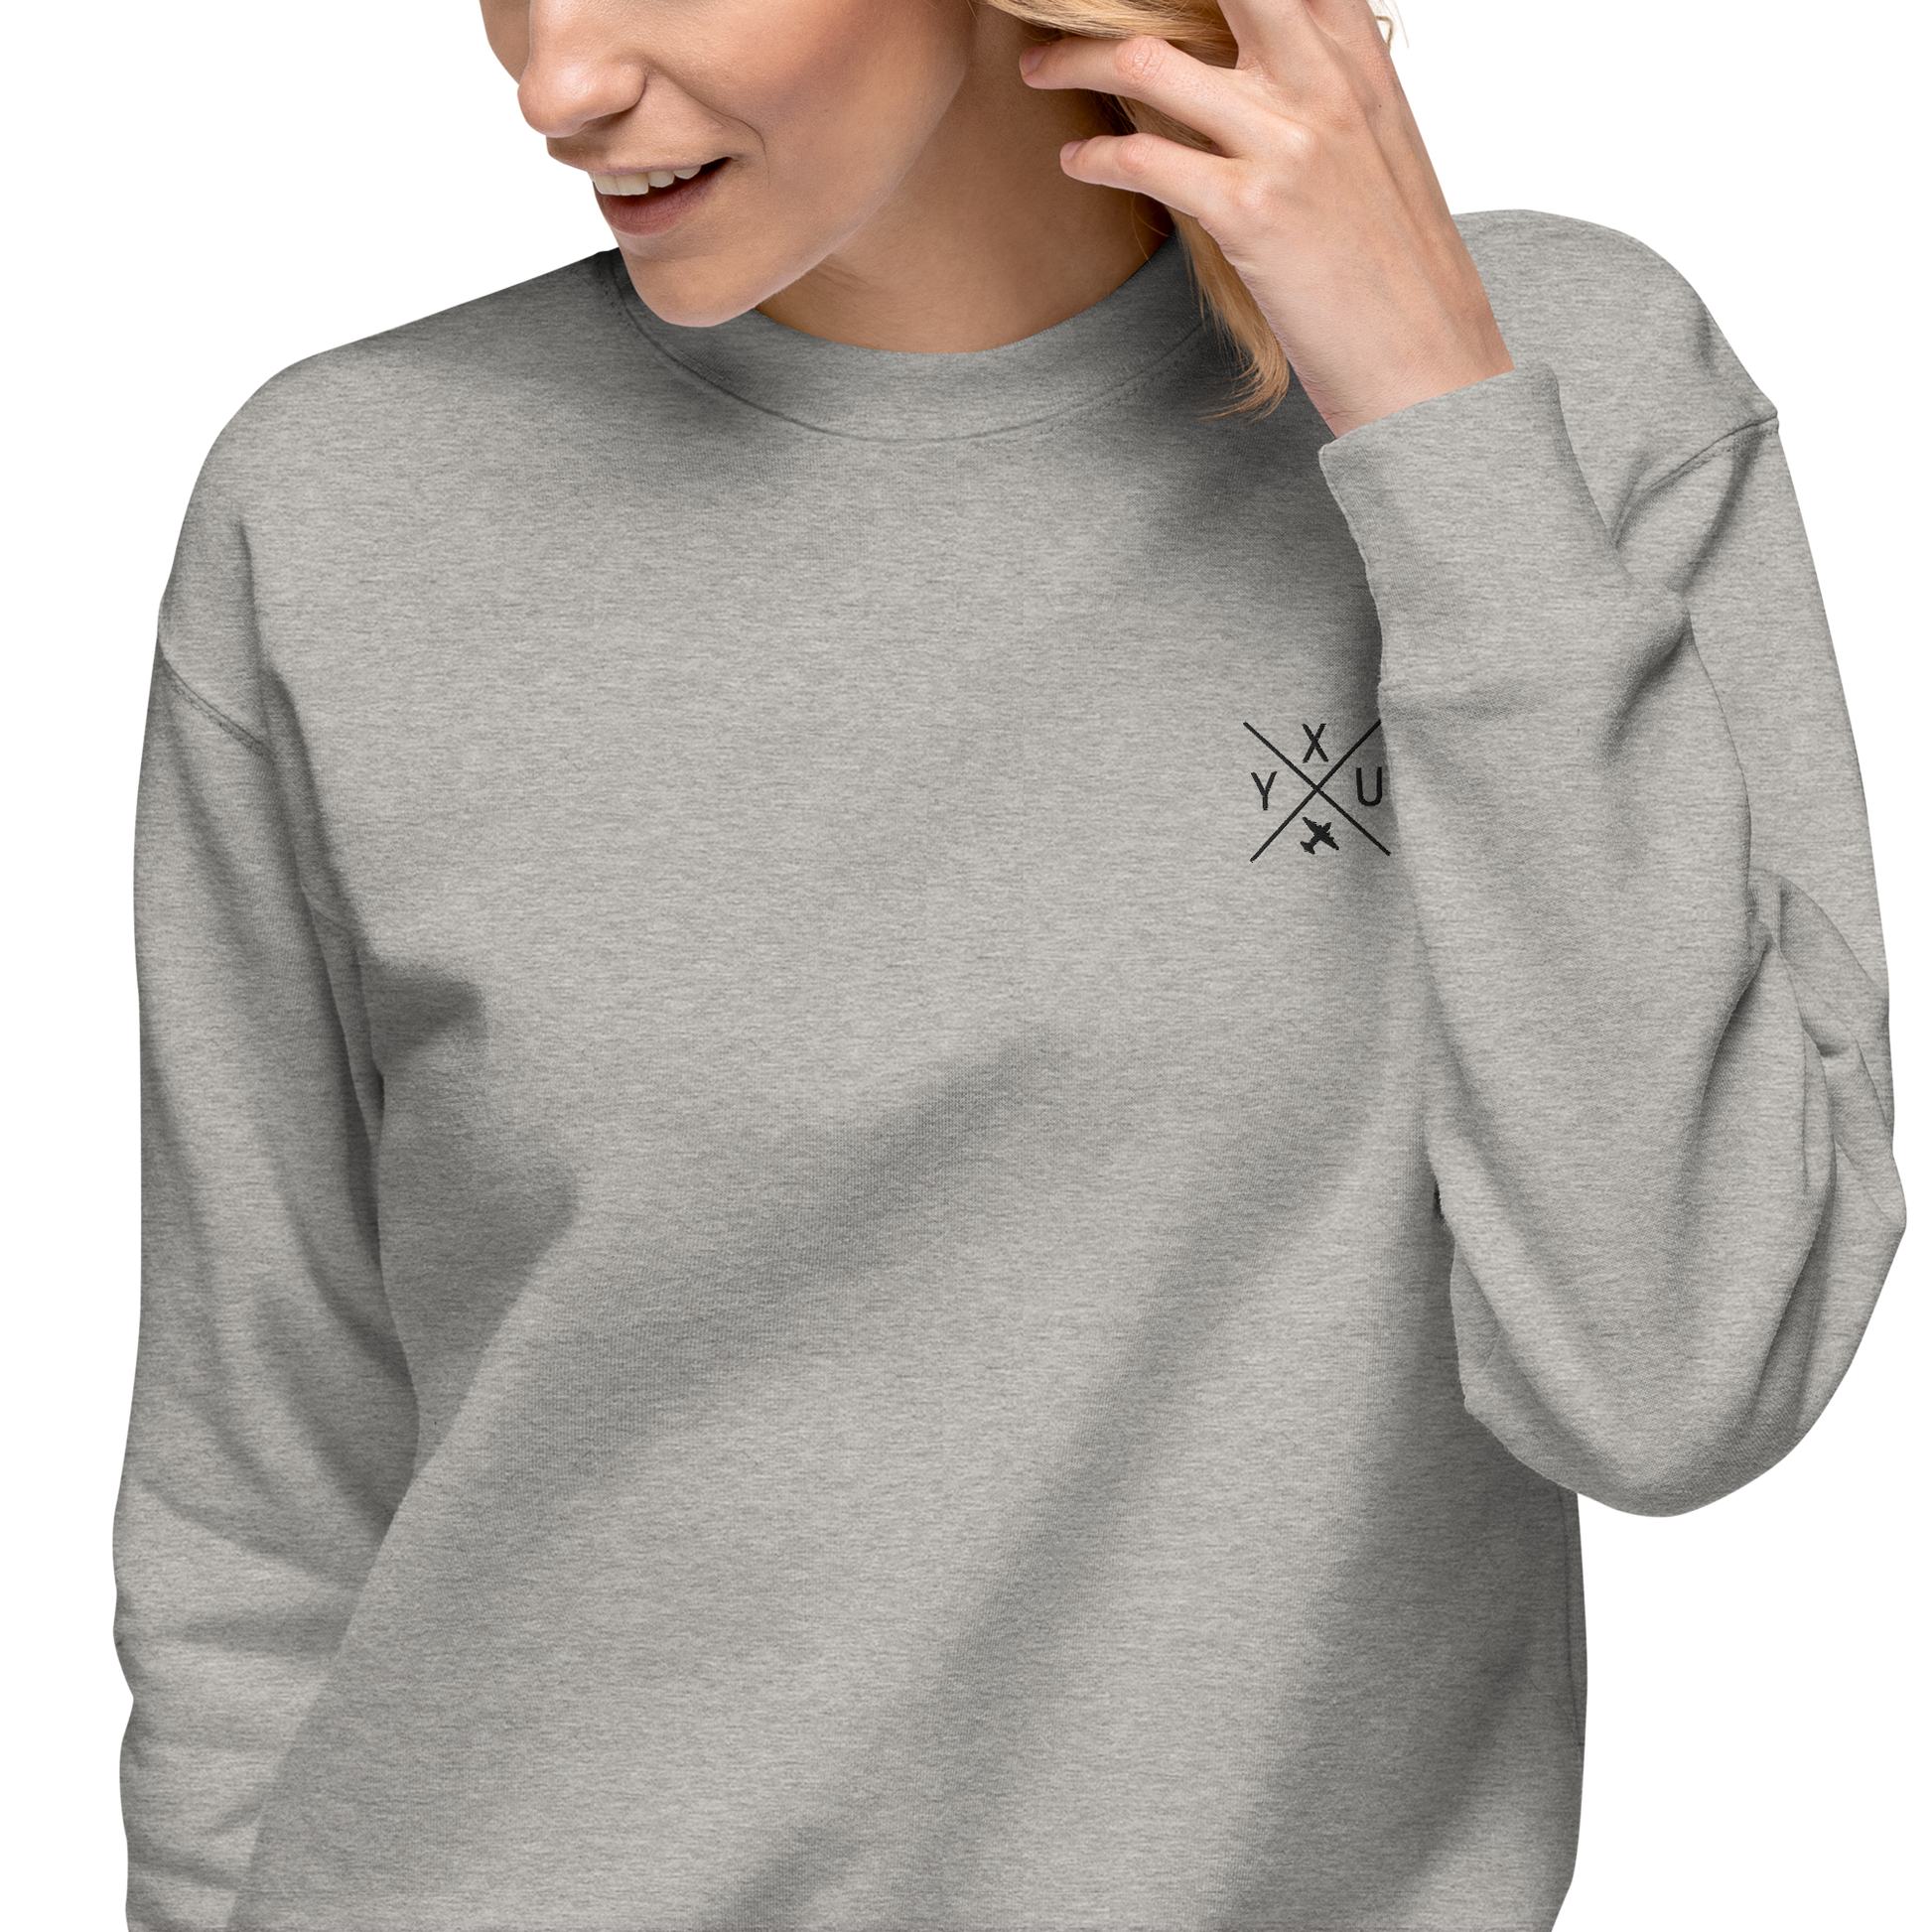 YHM Designs - YXU London Premium Sweatshirt - Crossed-X Design with Airport Code and Vintage Propliner - Black Embroidery - Image 03